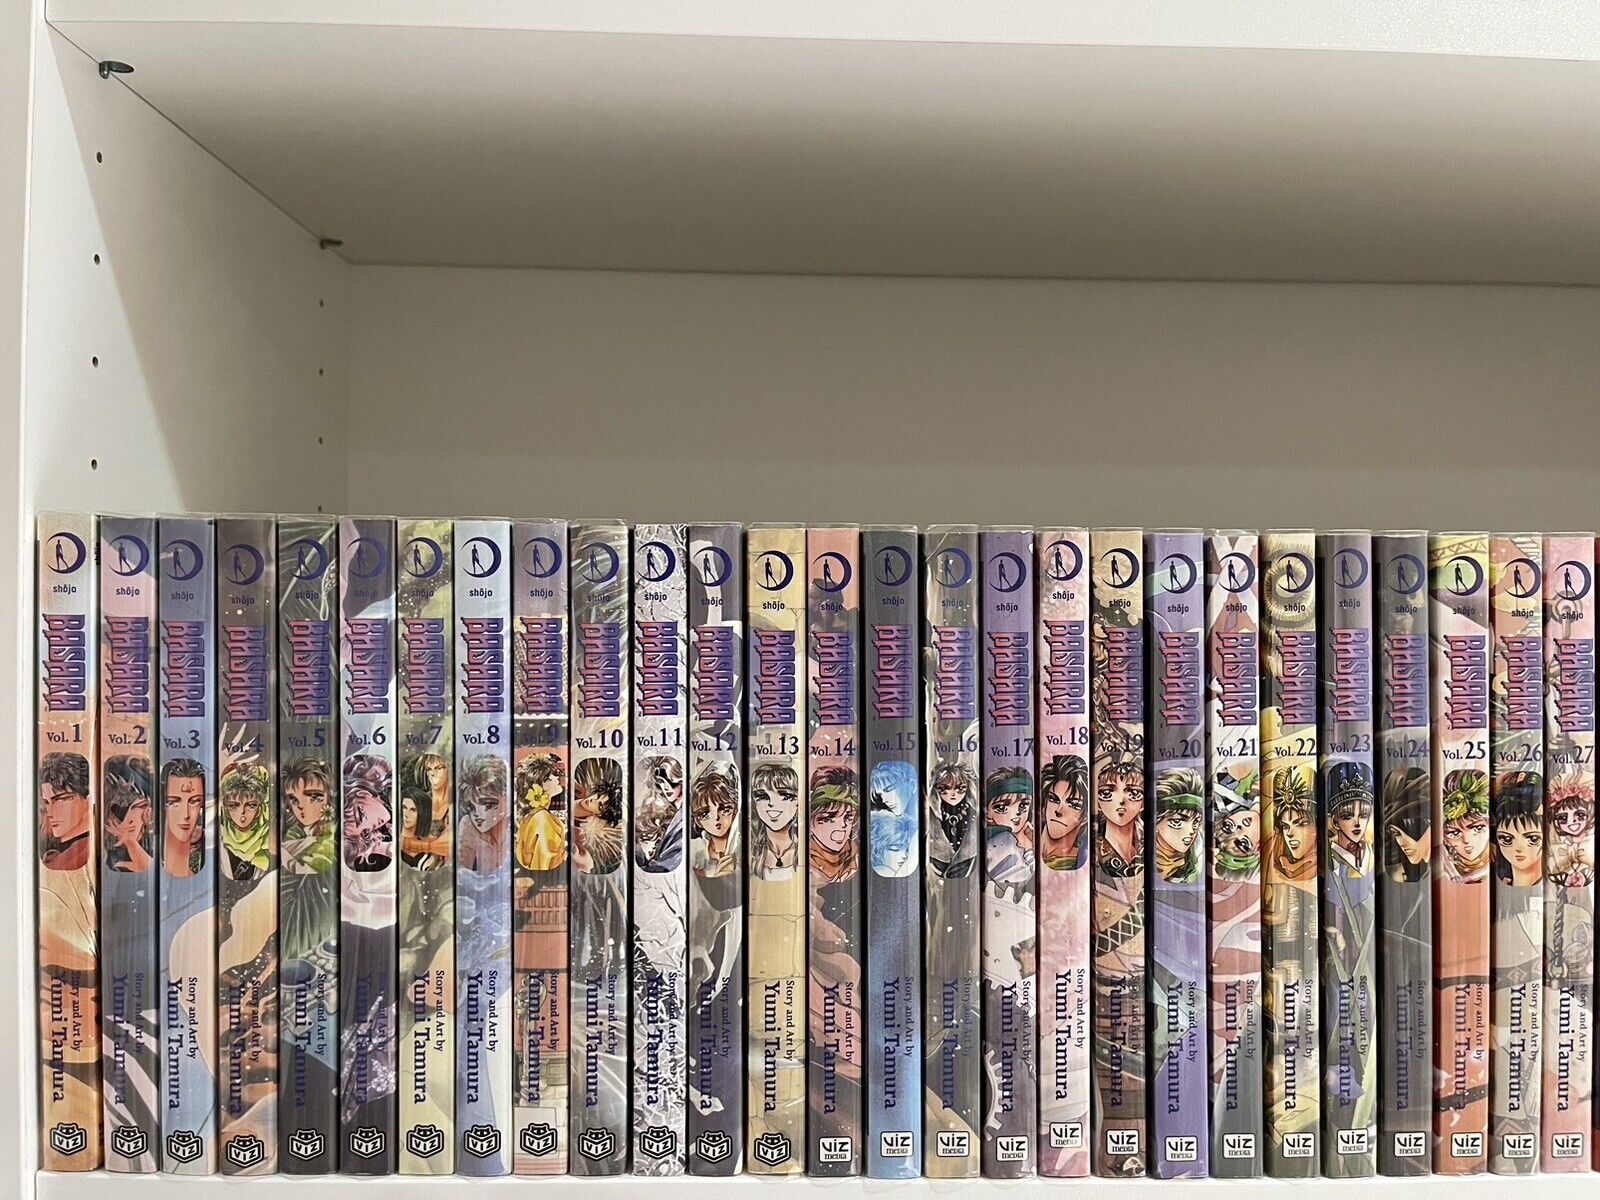 Basara Manga Volumes 1-27 Complete English Set Yumi Tamura OOP [FIRST PRINTINGS]